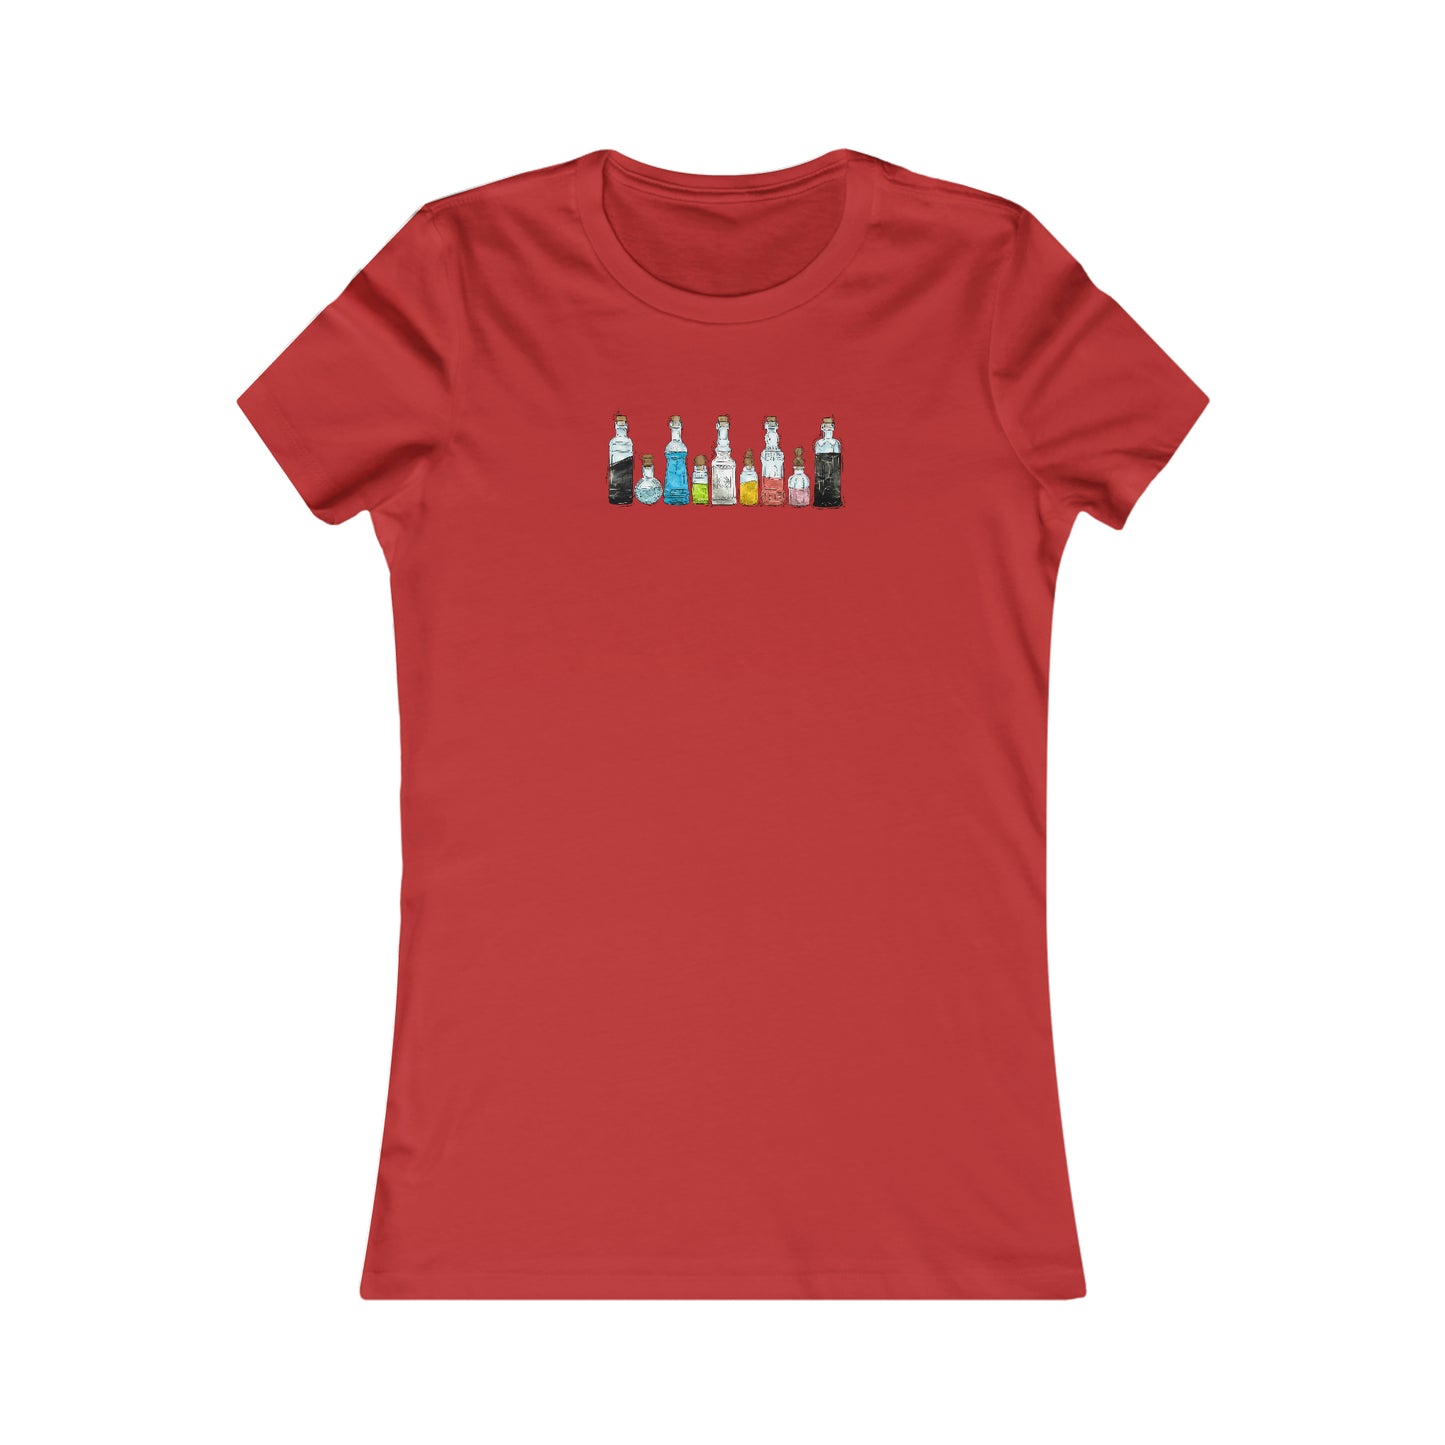 Queer Pride Potion Bottles - Women's T-Shirt